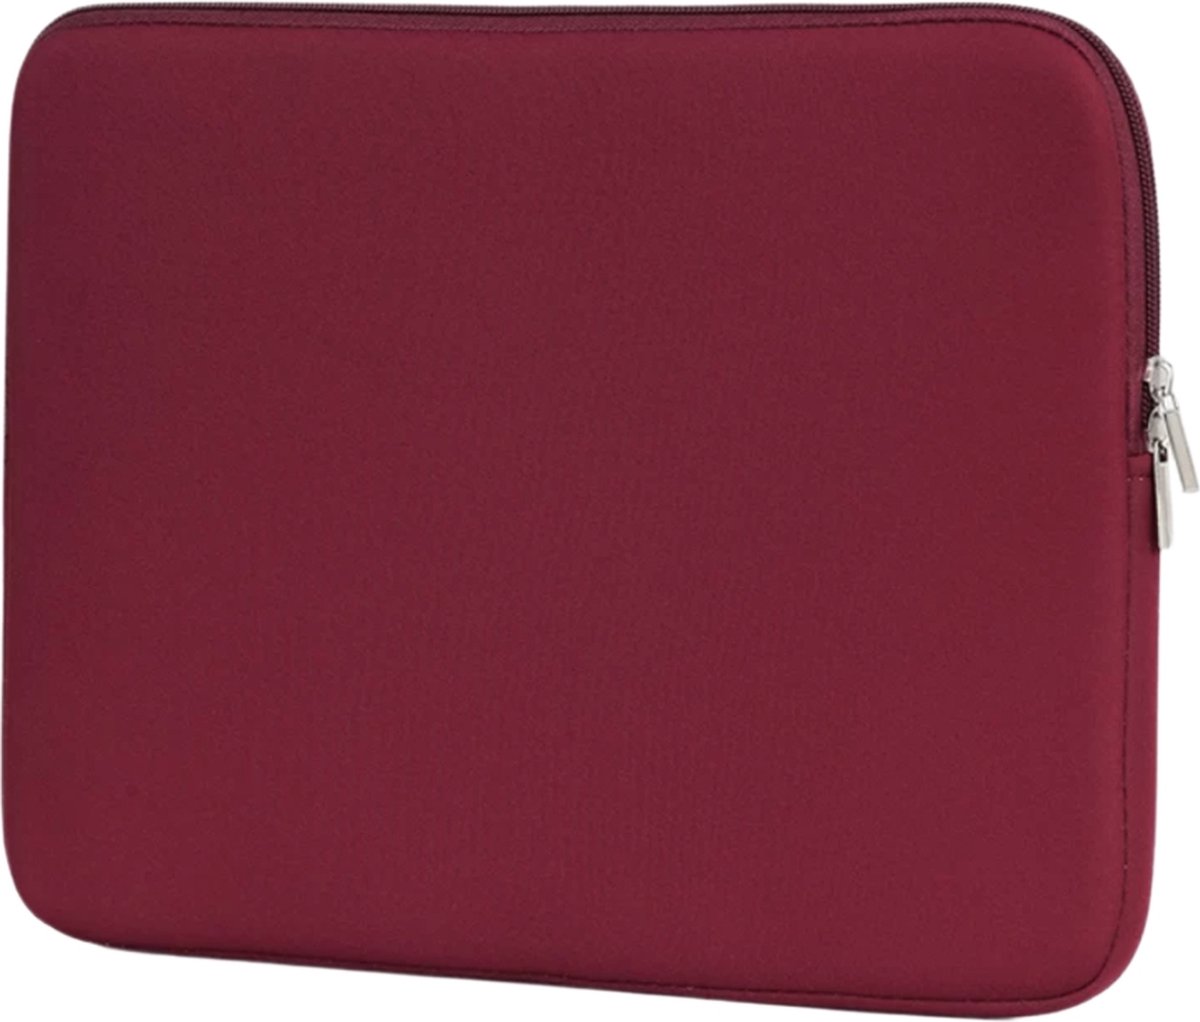 Handige universele laptophoes – case – sleeve – 15,6 inch – bordeaux rood- Schokproof